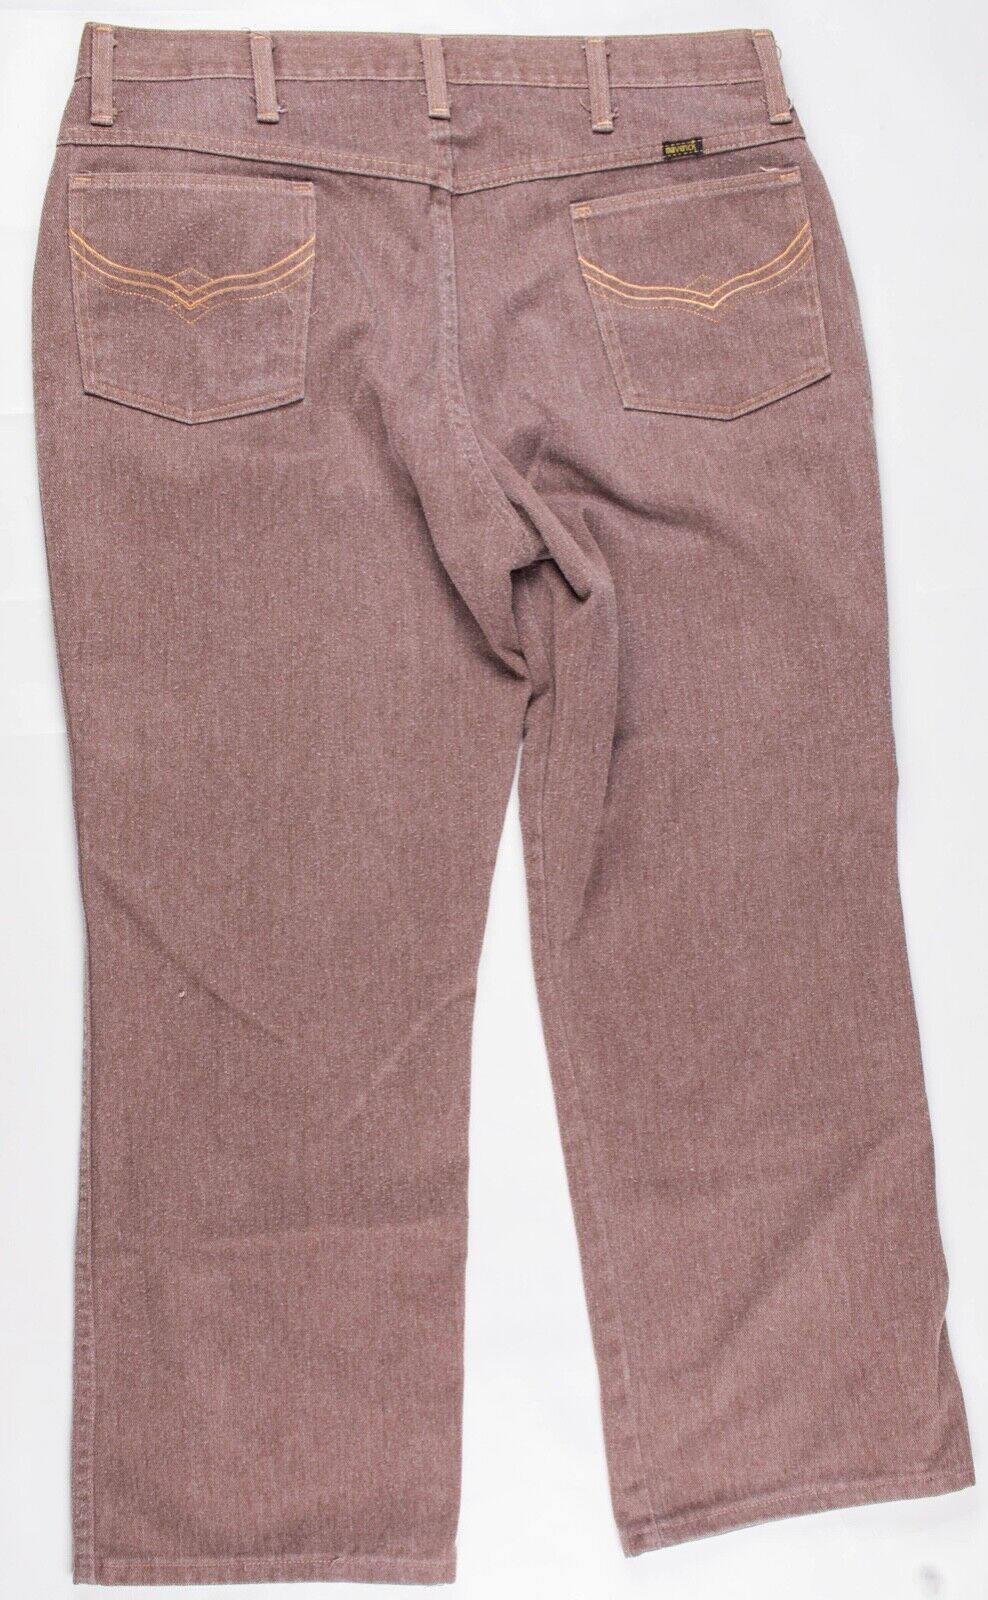 Vintage 1960s/70s MAVERICK Denim Jeans Pants Trousers Talon Zipper 